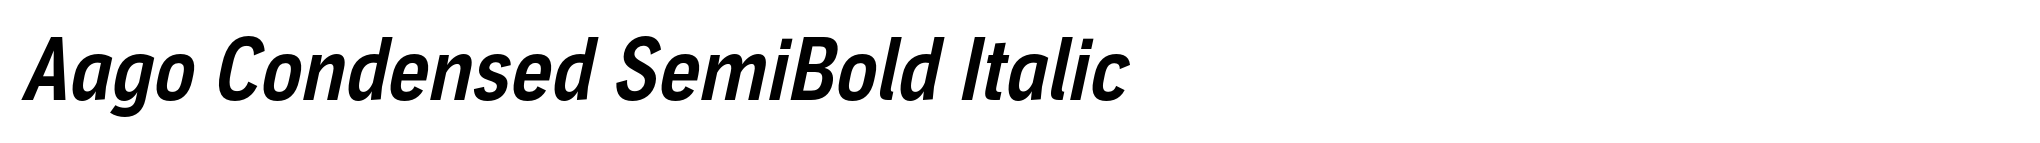 Aago Condensed SemiBold Italic image